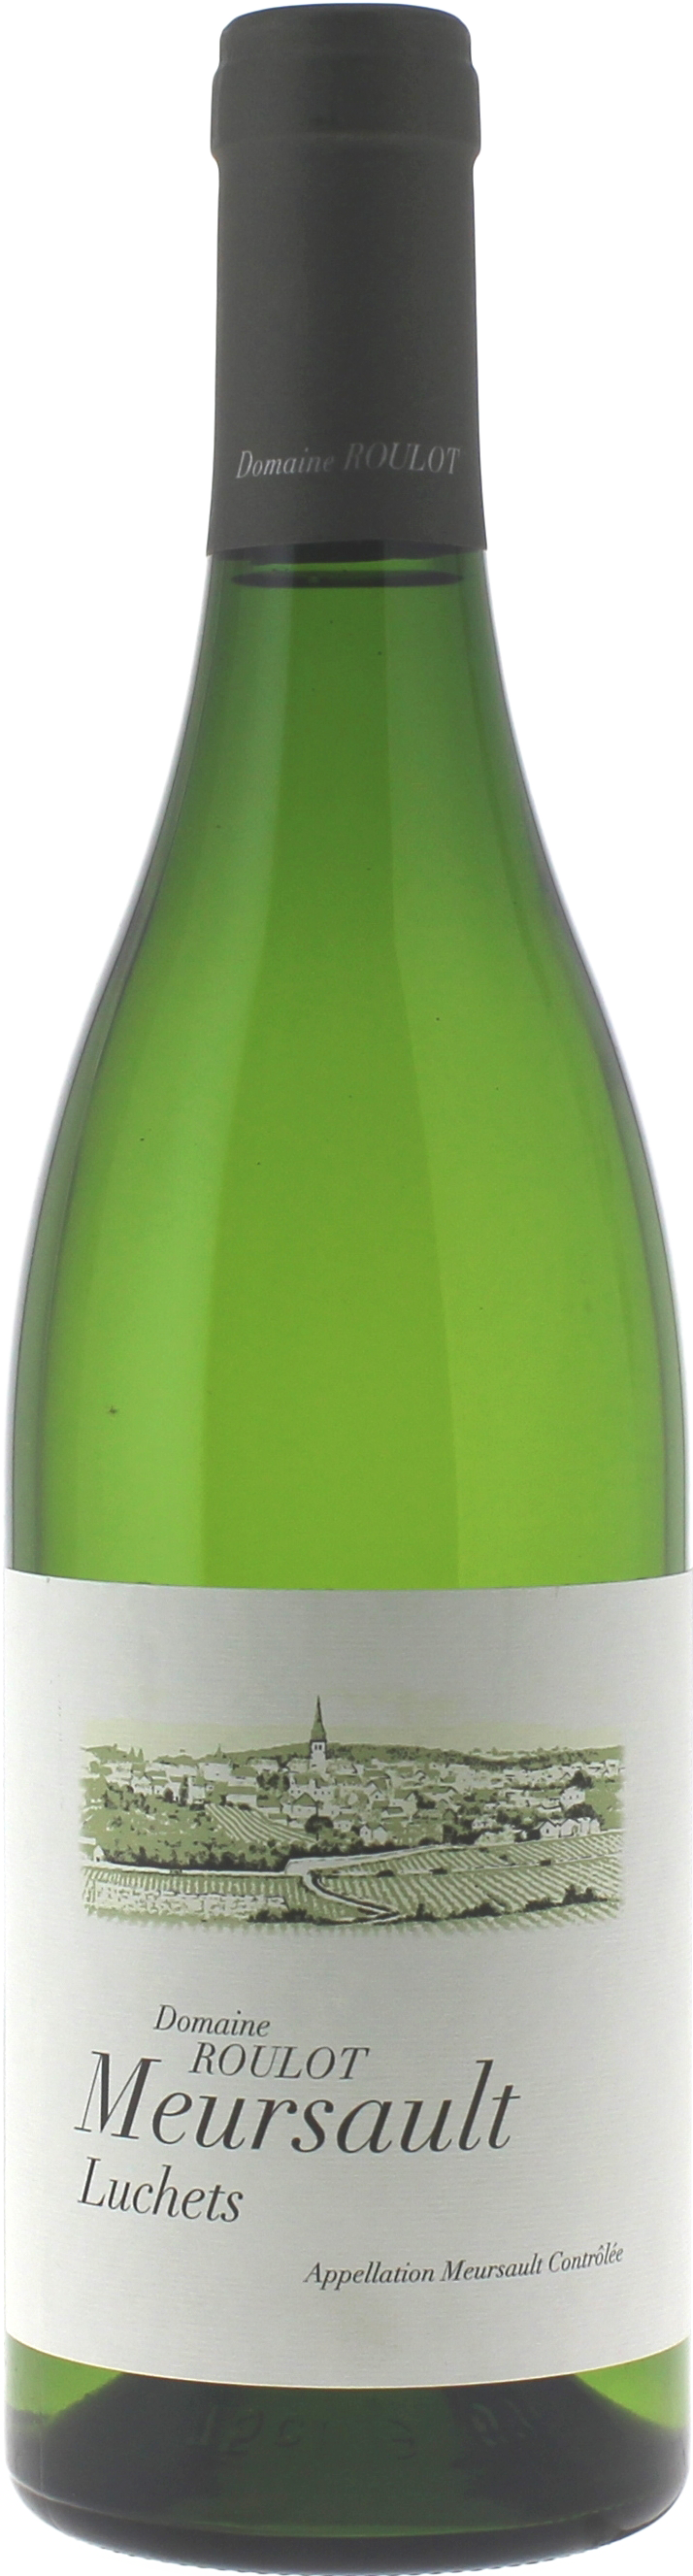 Meursault luchets 2015 Domaine ROULOT Jean Marc, Bourgogne blanc